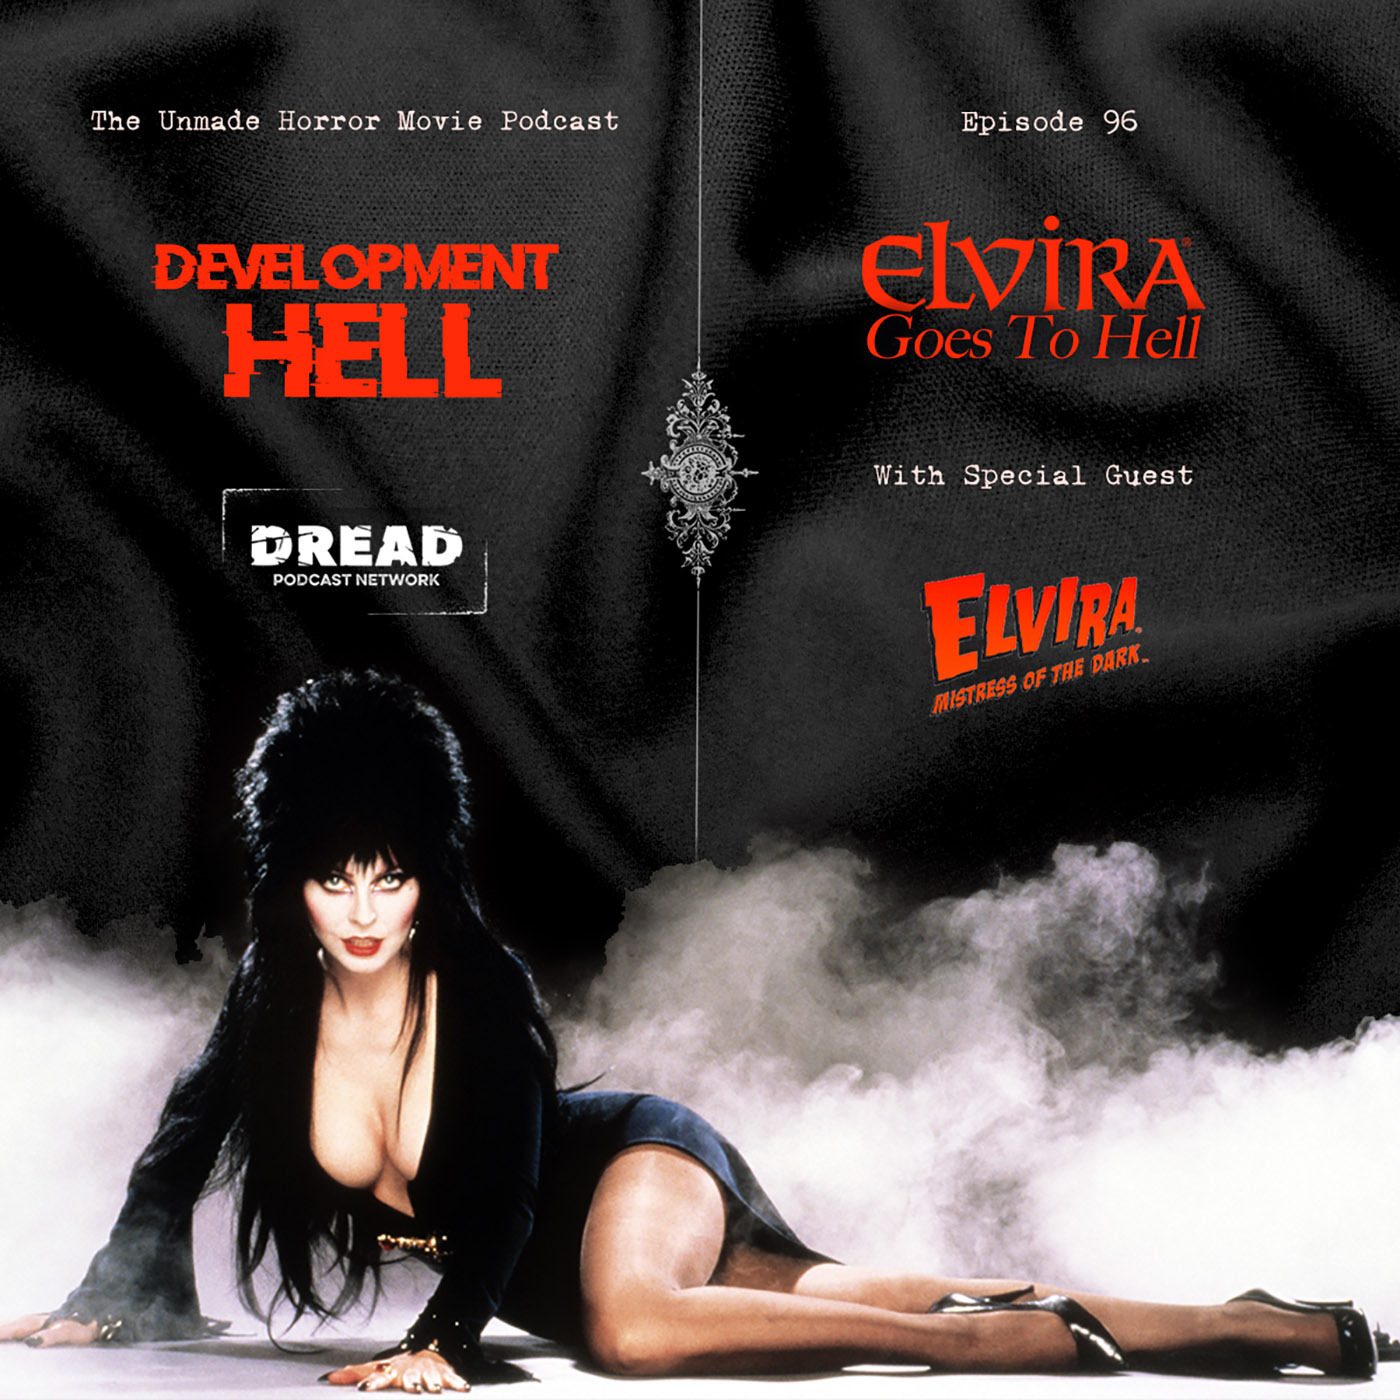 ELVIRA GOES TO HELL (with Elvira)